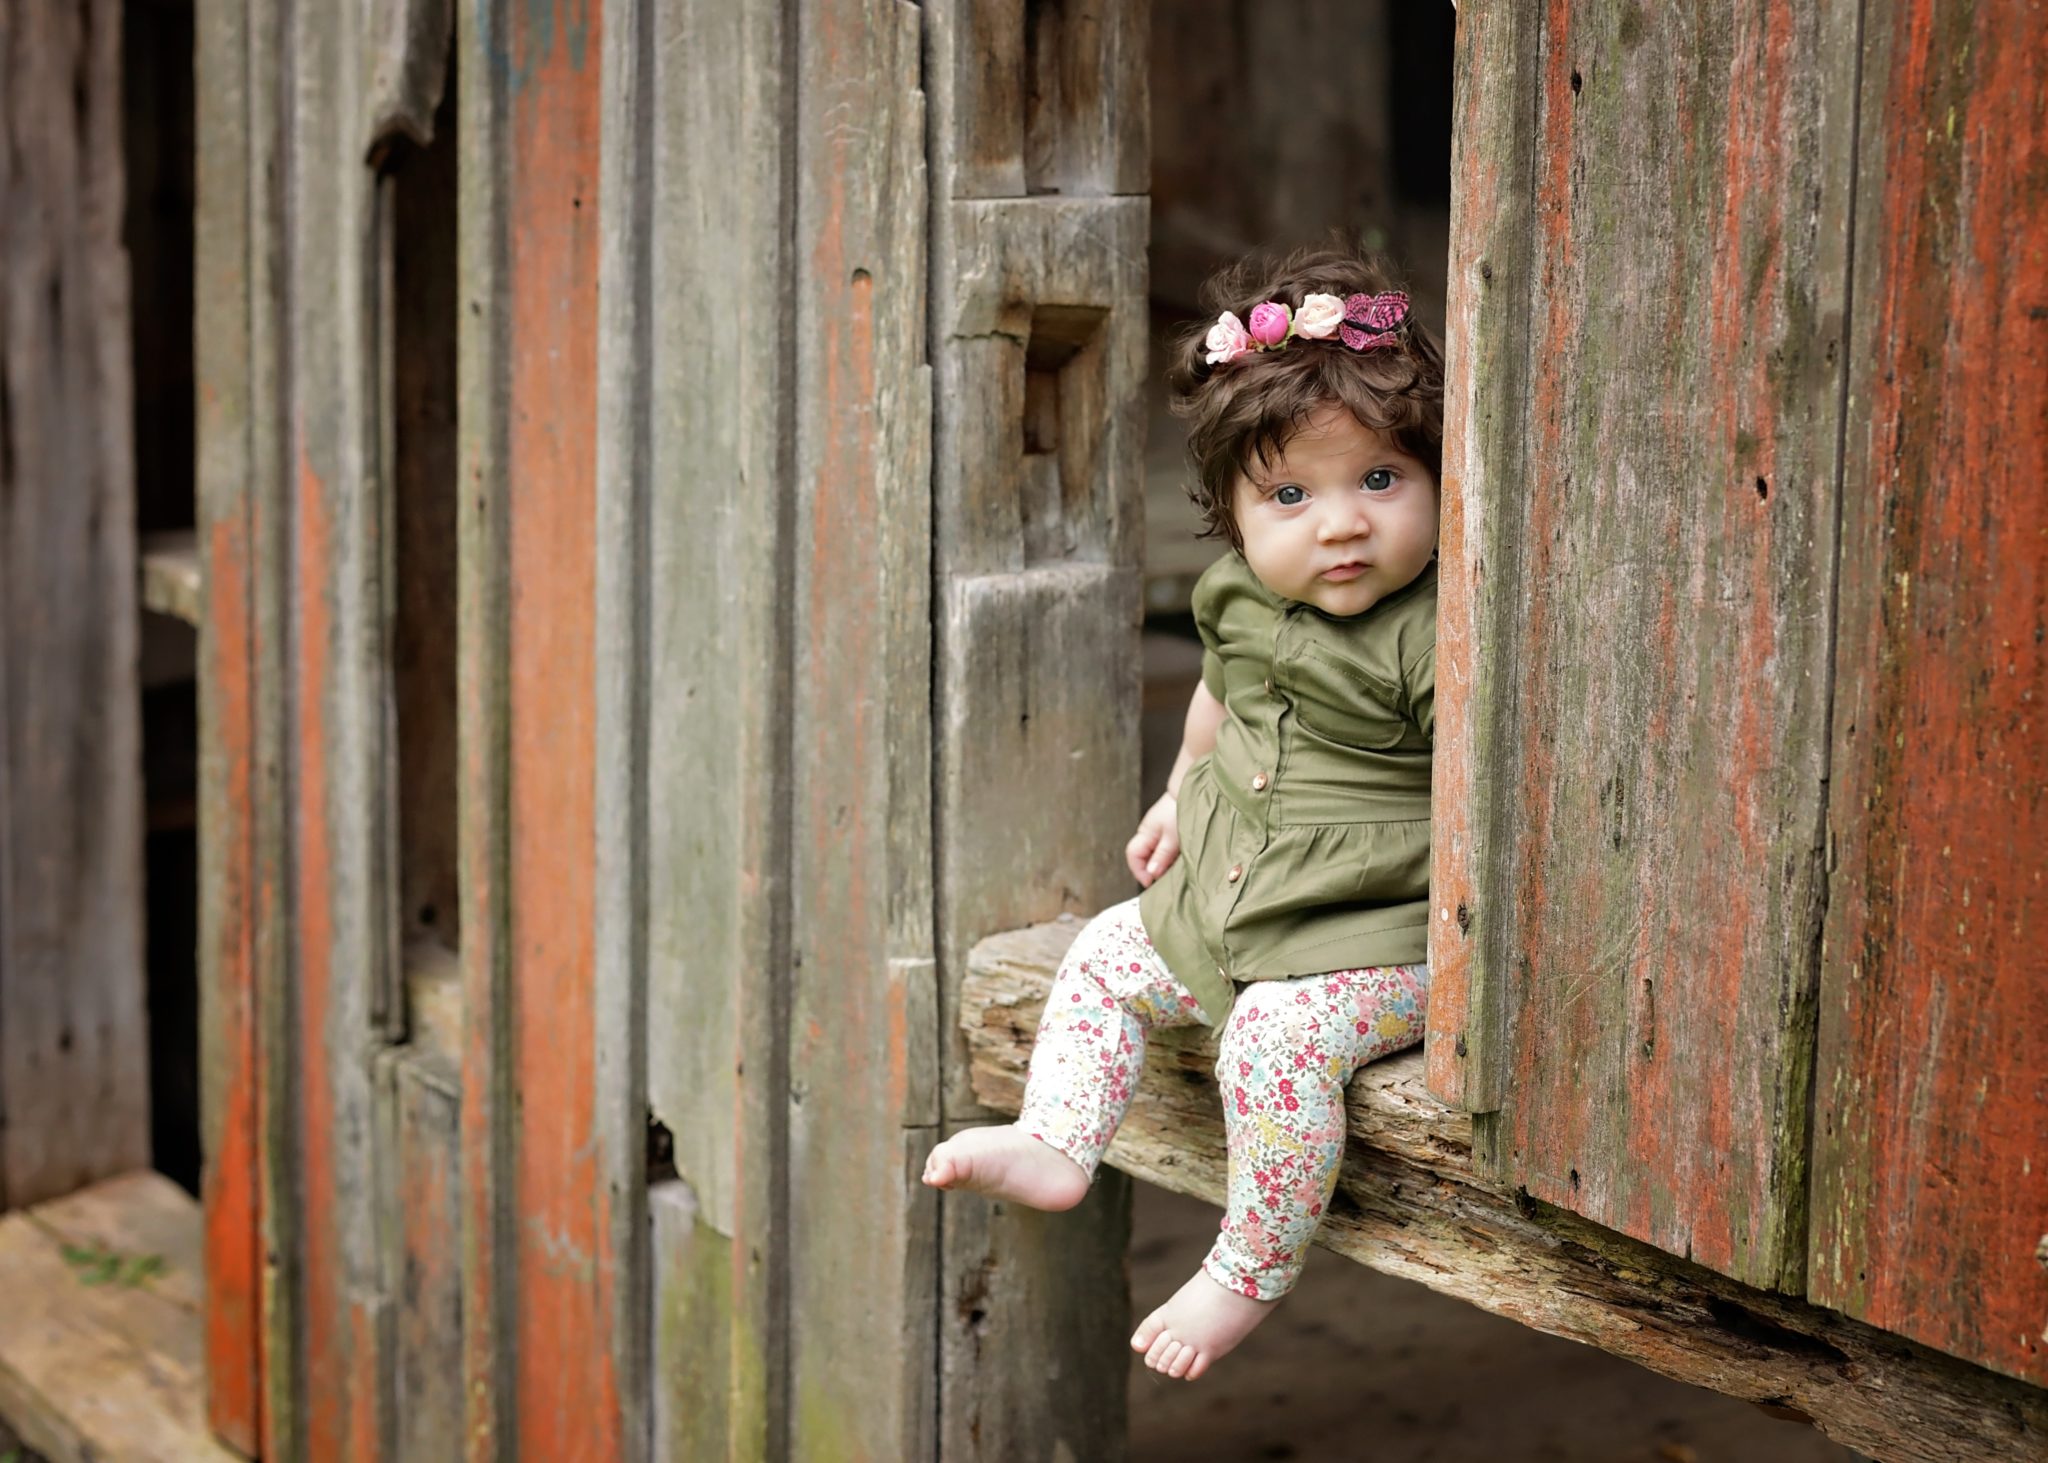 Baby portrait by Durham Region family photographer Annya Miller